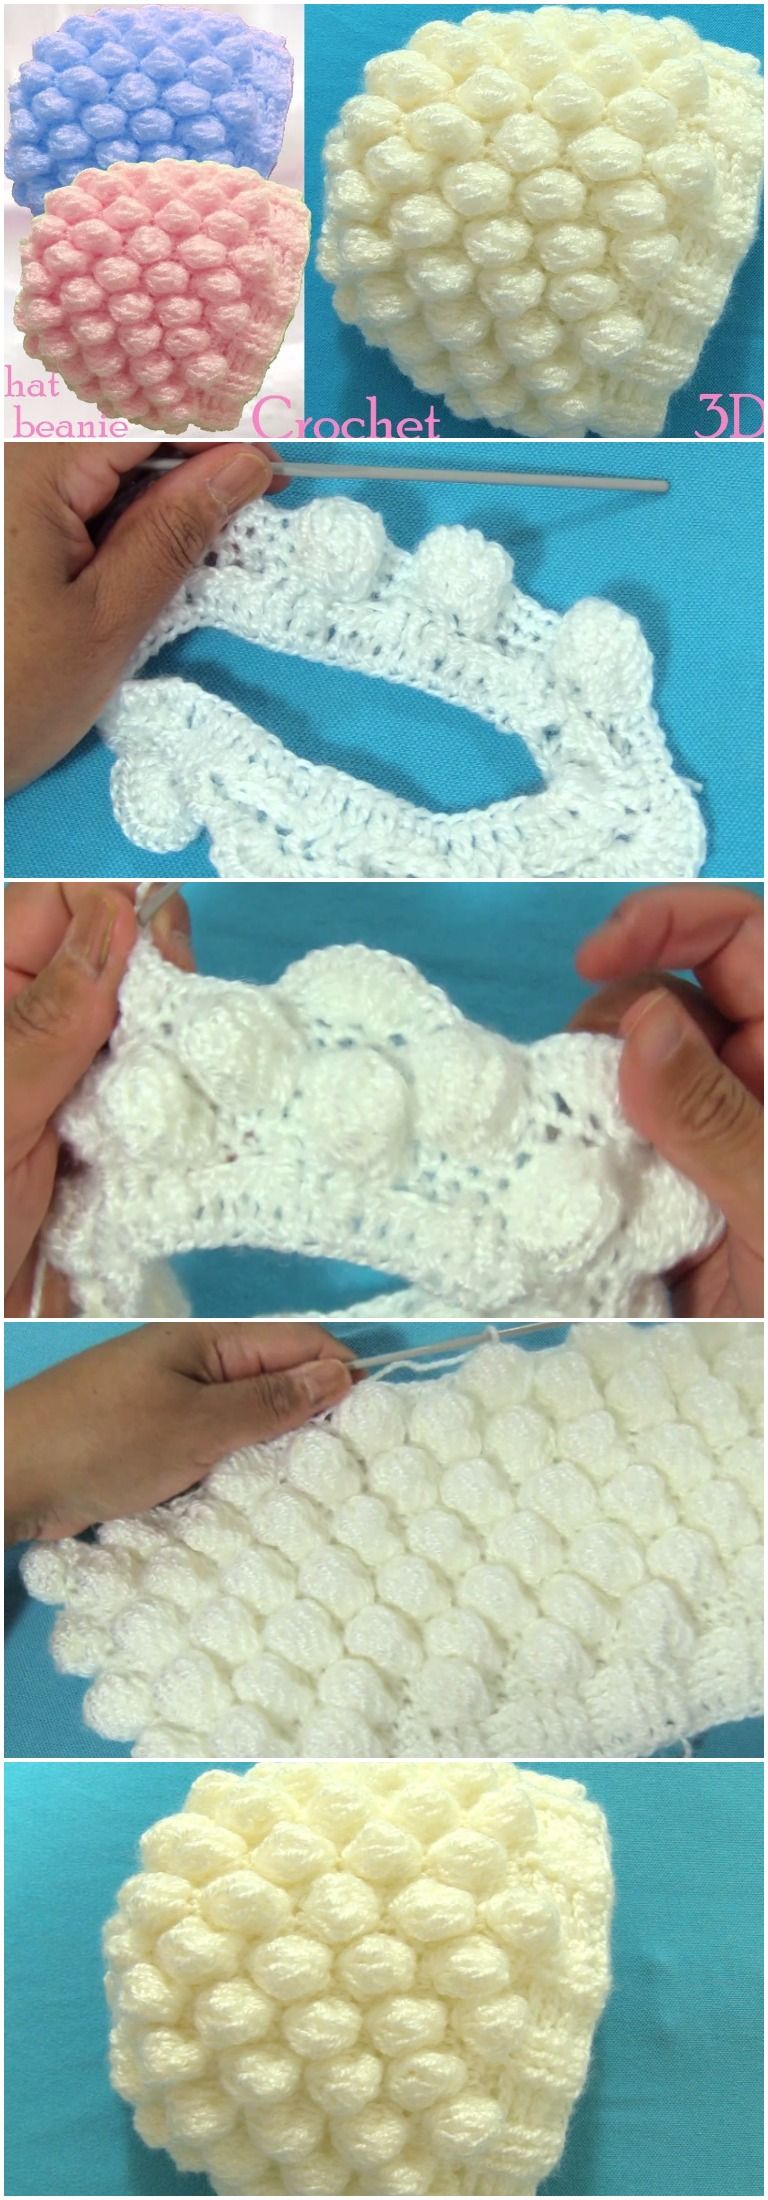 Crochet-3D-Beanie-Hat-With-Snow-Balls-Stitch-Free-Pattern.jpg